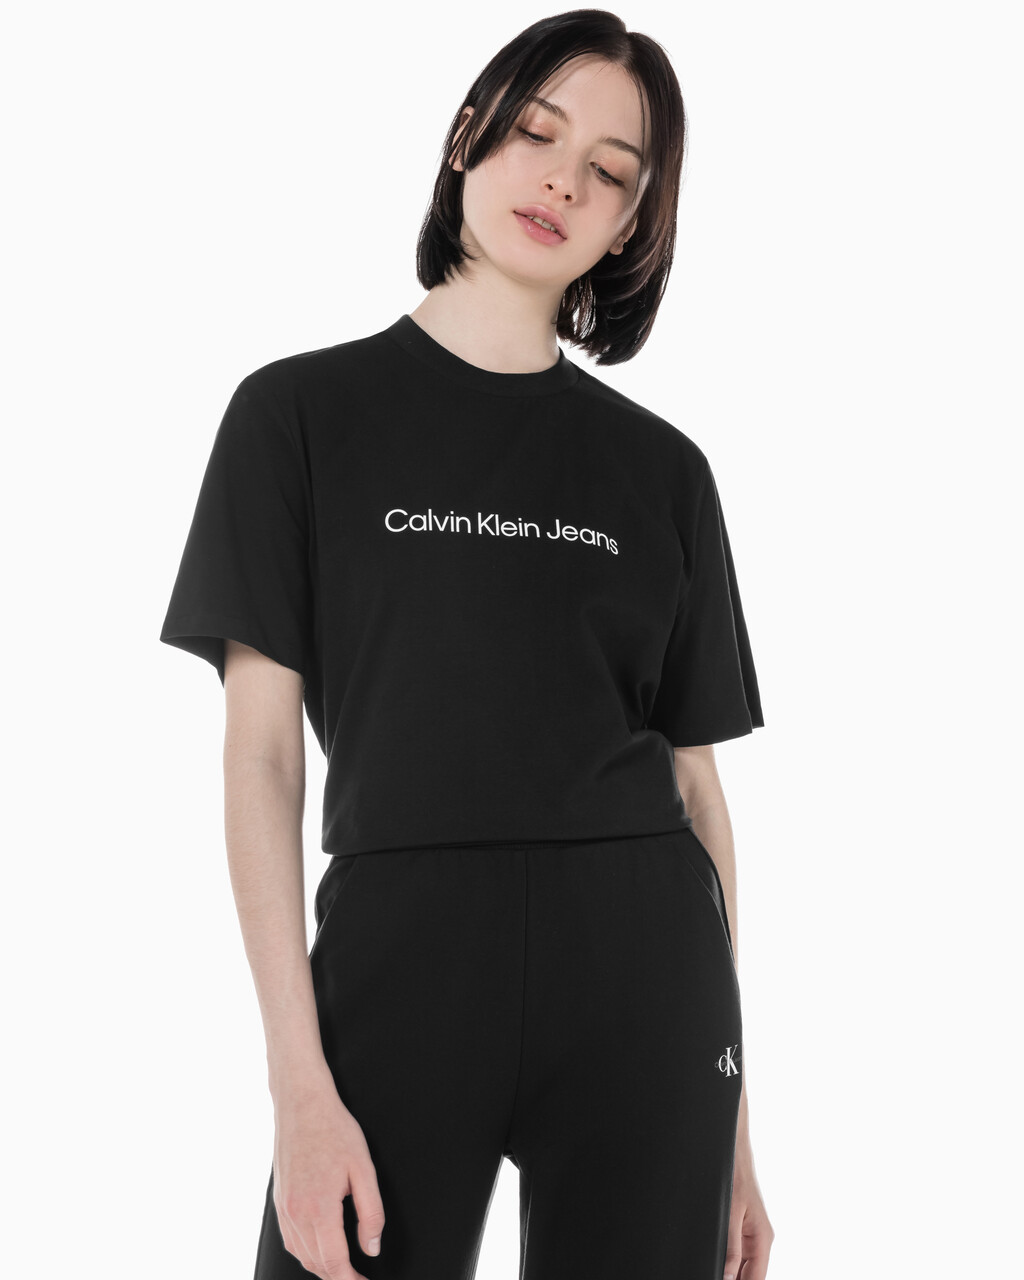 Buy 여성 보이프렌드핏 코튼 스트레치 반팔 티셔츠 in color CK BLACK